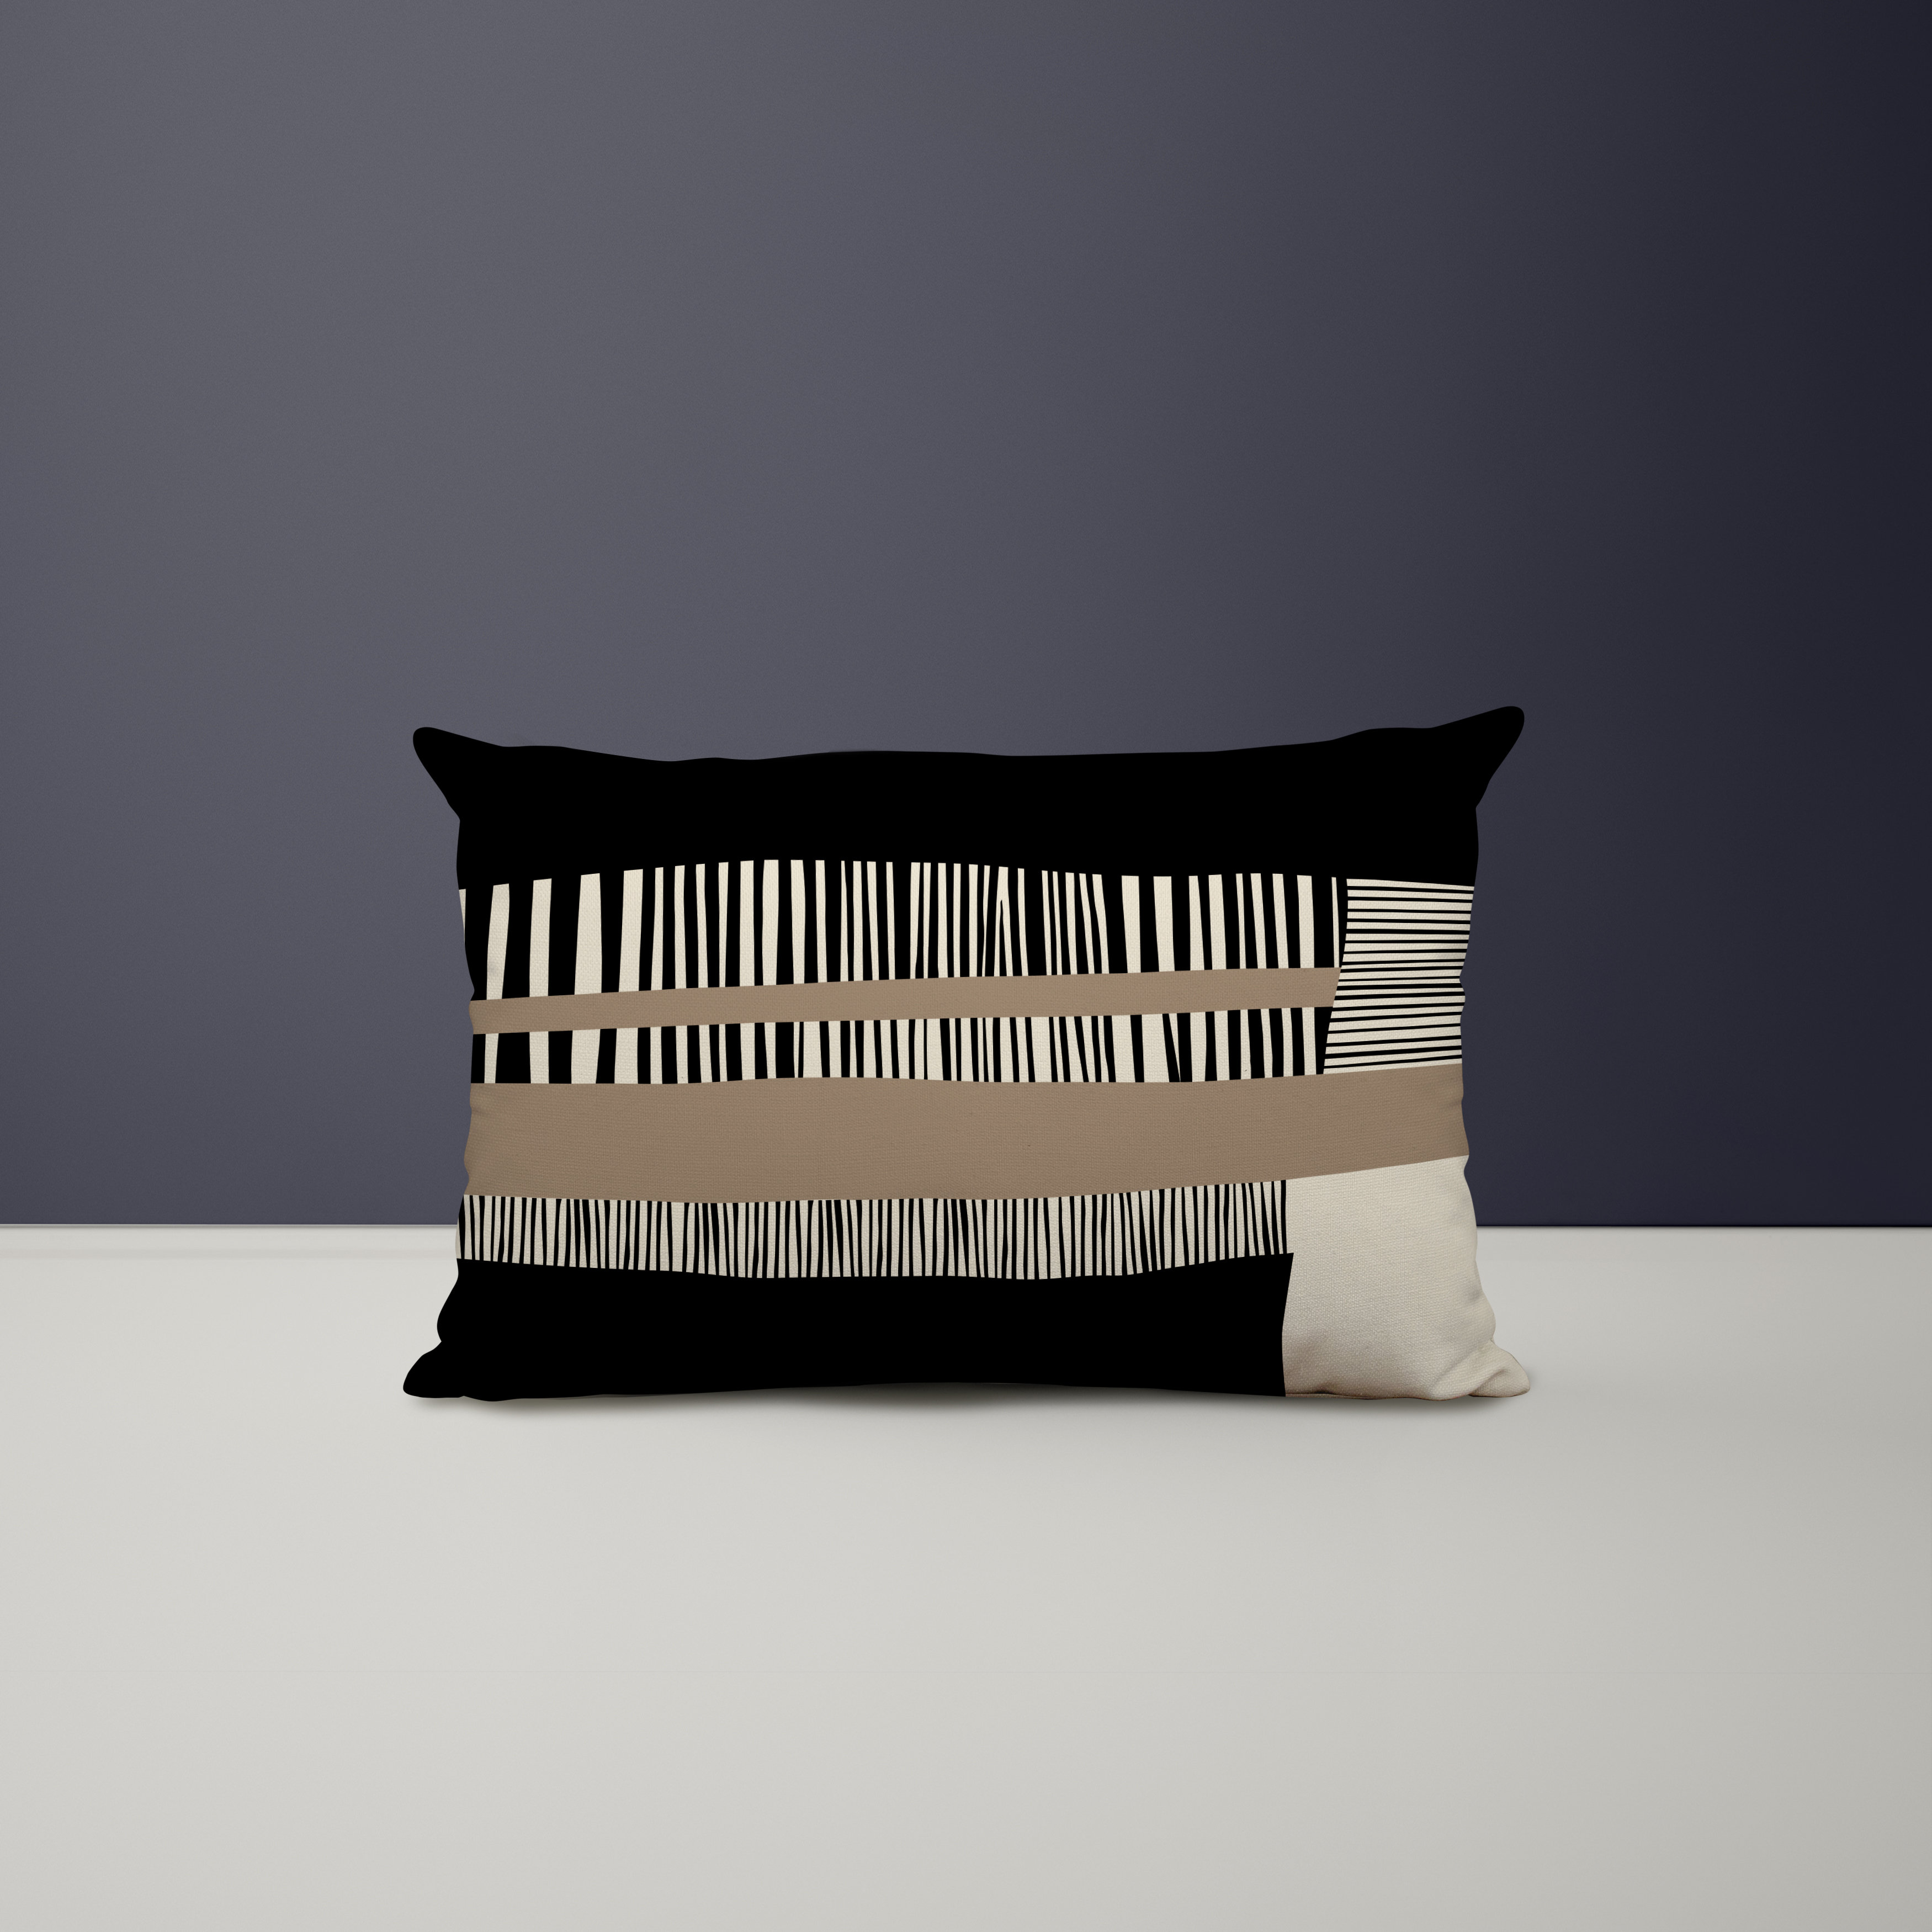 Pillow Inserts :: Rectangular Woven Fabric Poly Filled Pillow